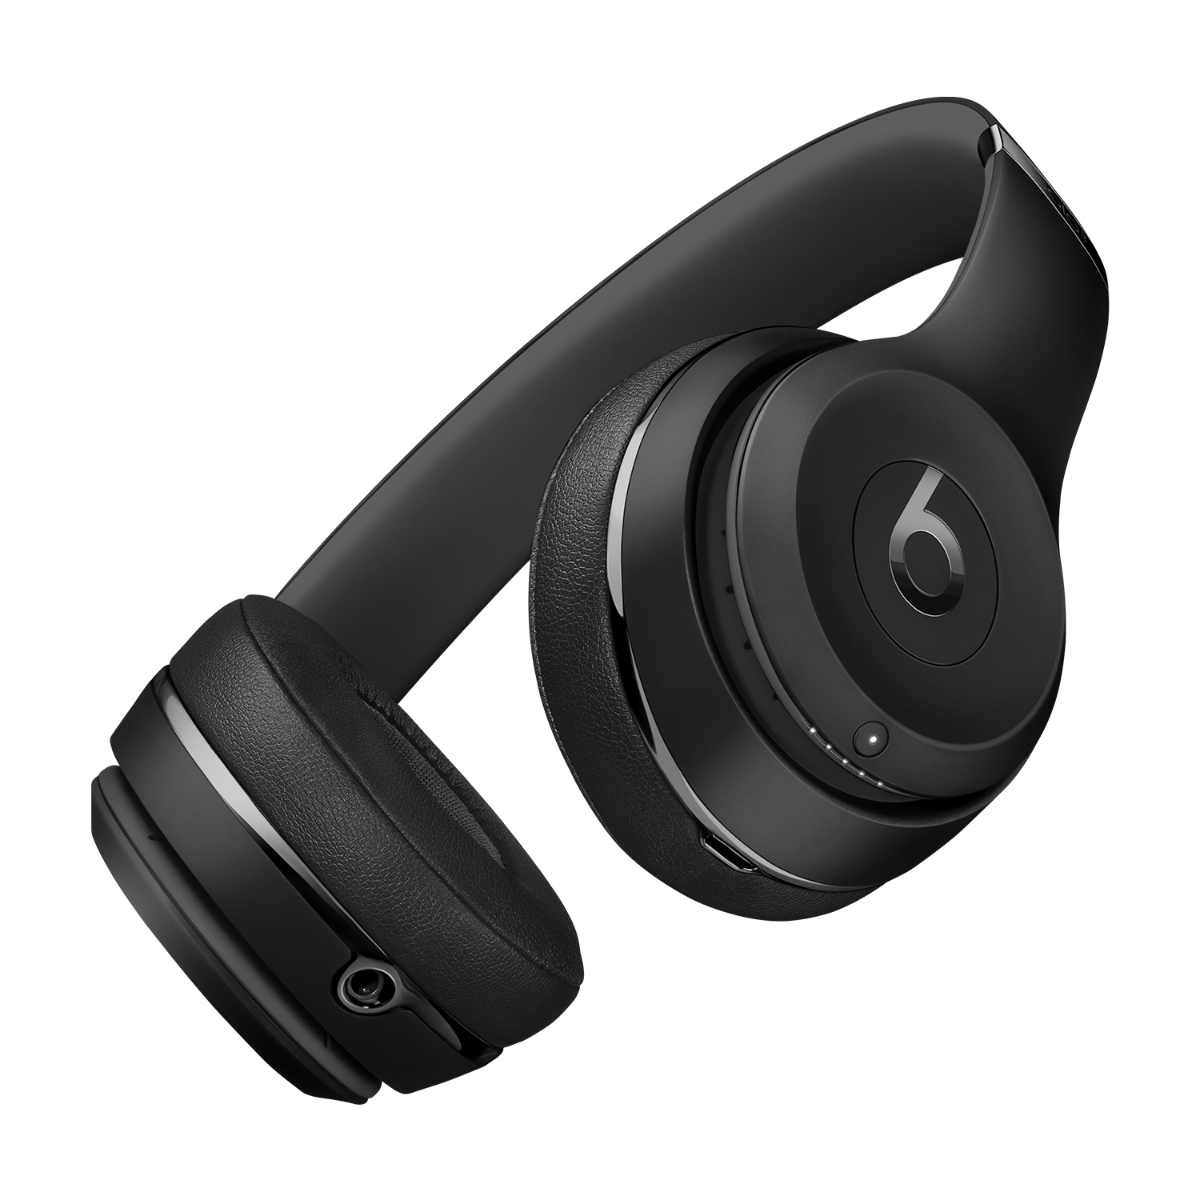 Solo³ Wireless - 适合日常使用的头戴式耳机- Beats